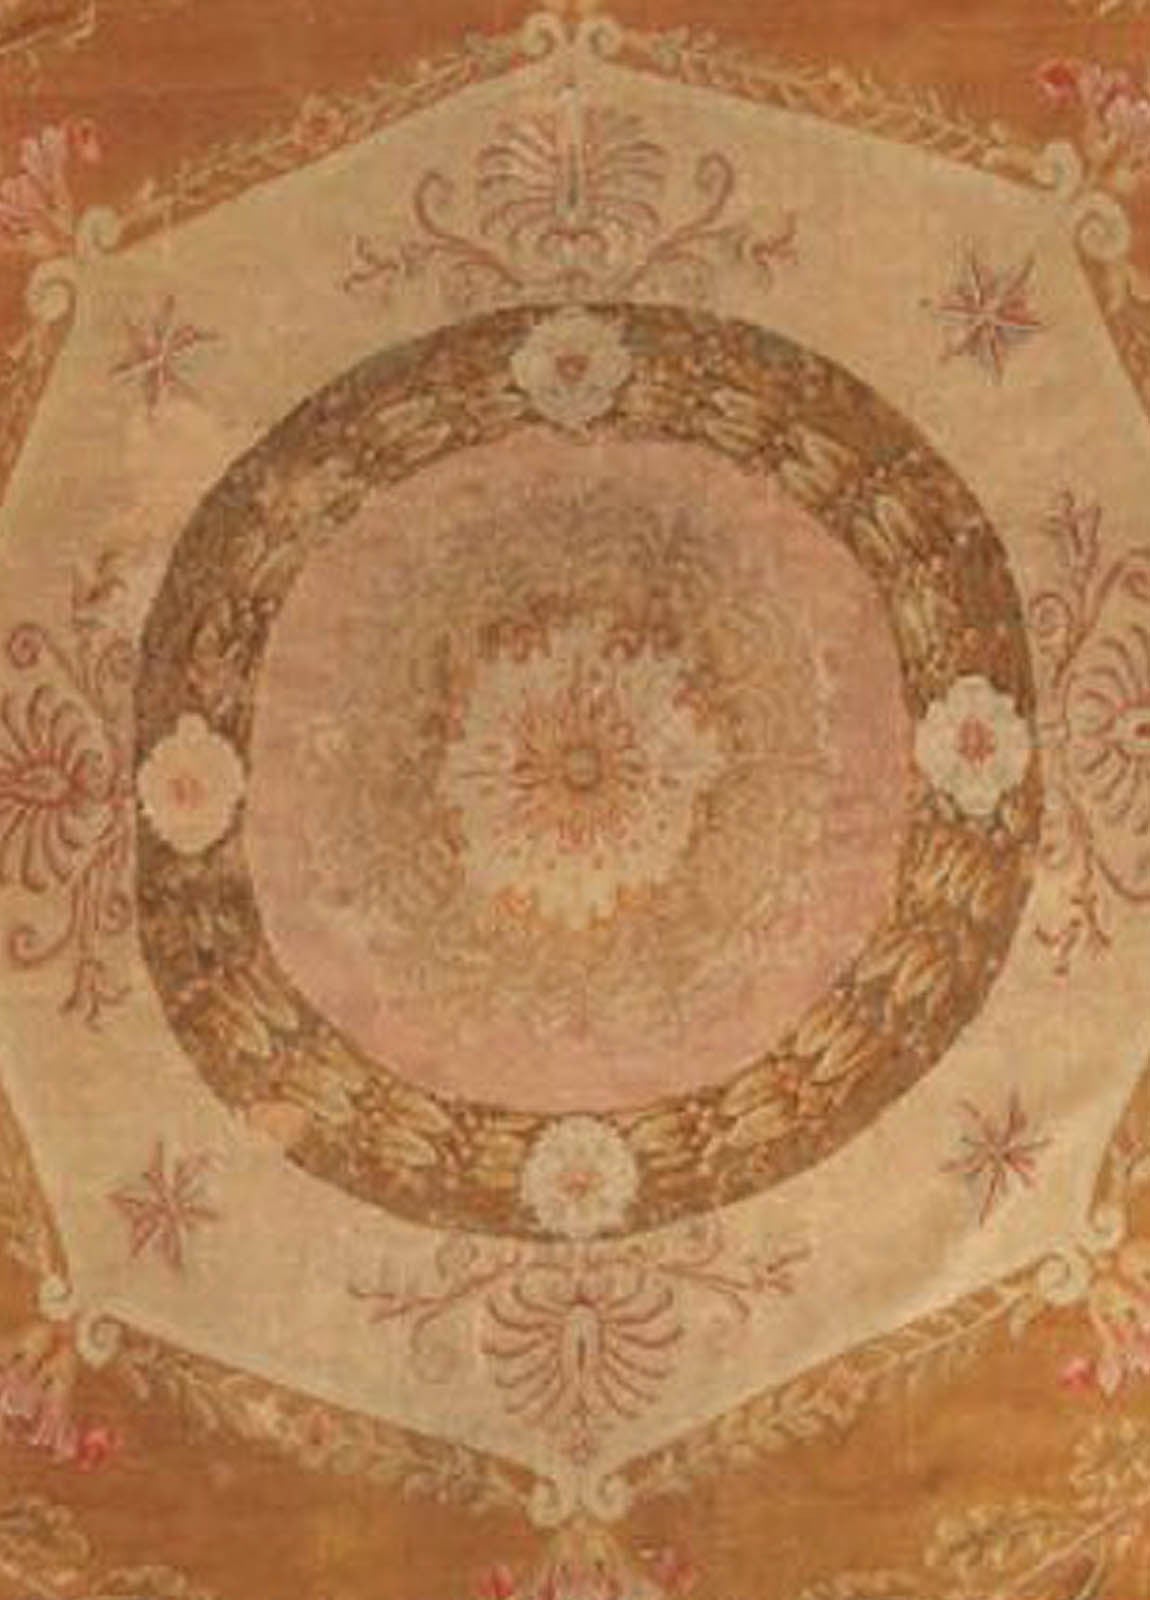 Oversized antique French Directoire Savonnerie carpet
Size: 16'0